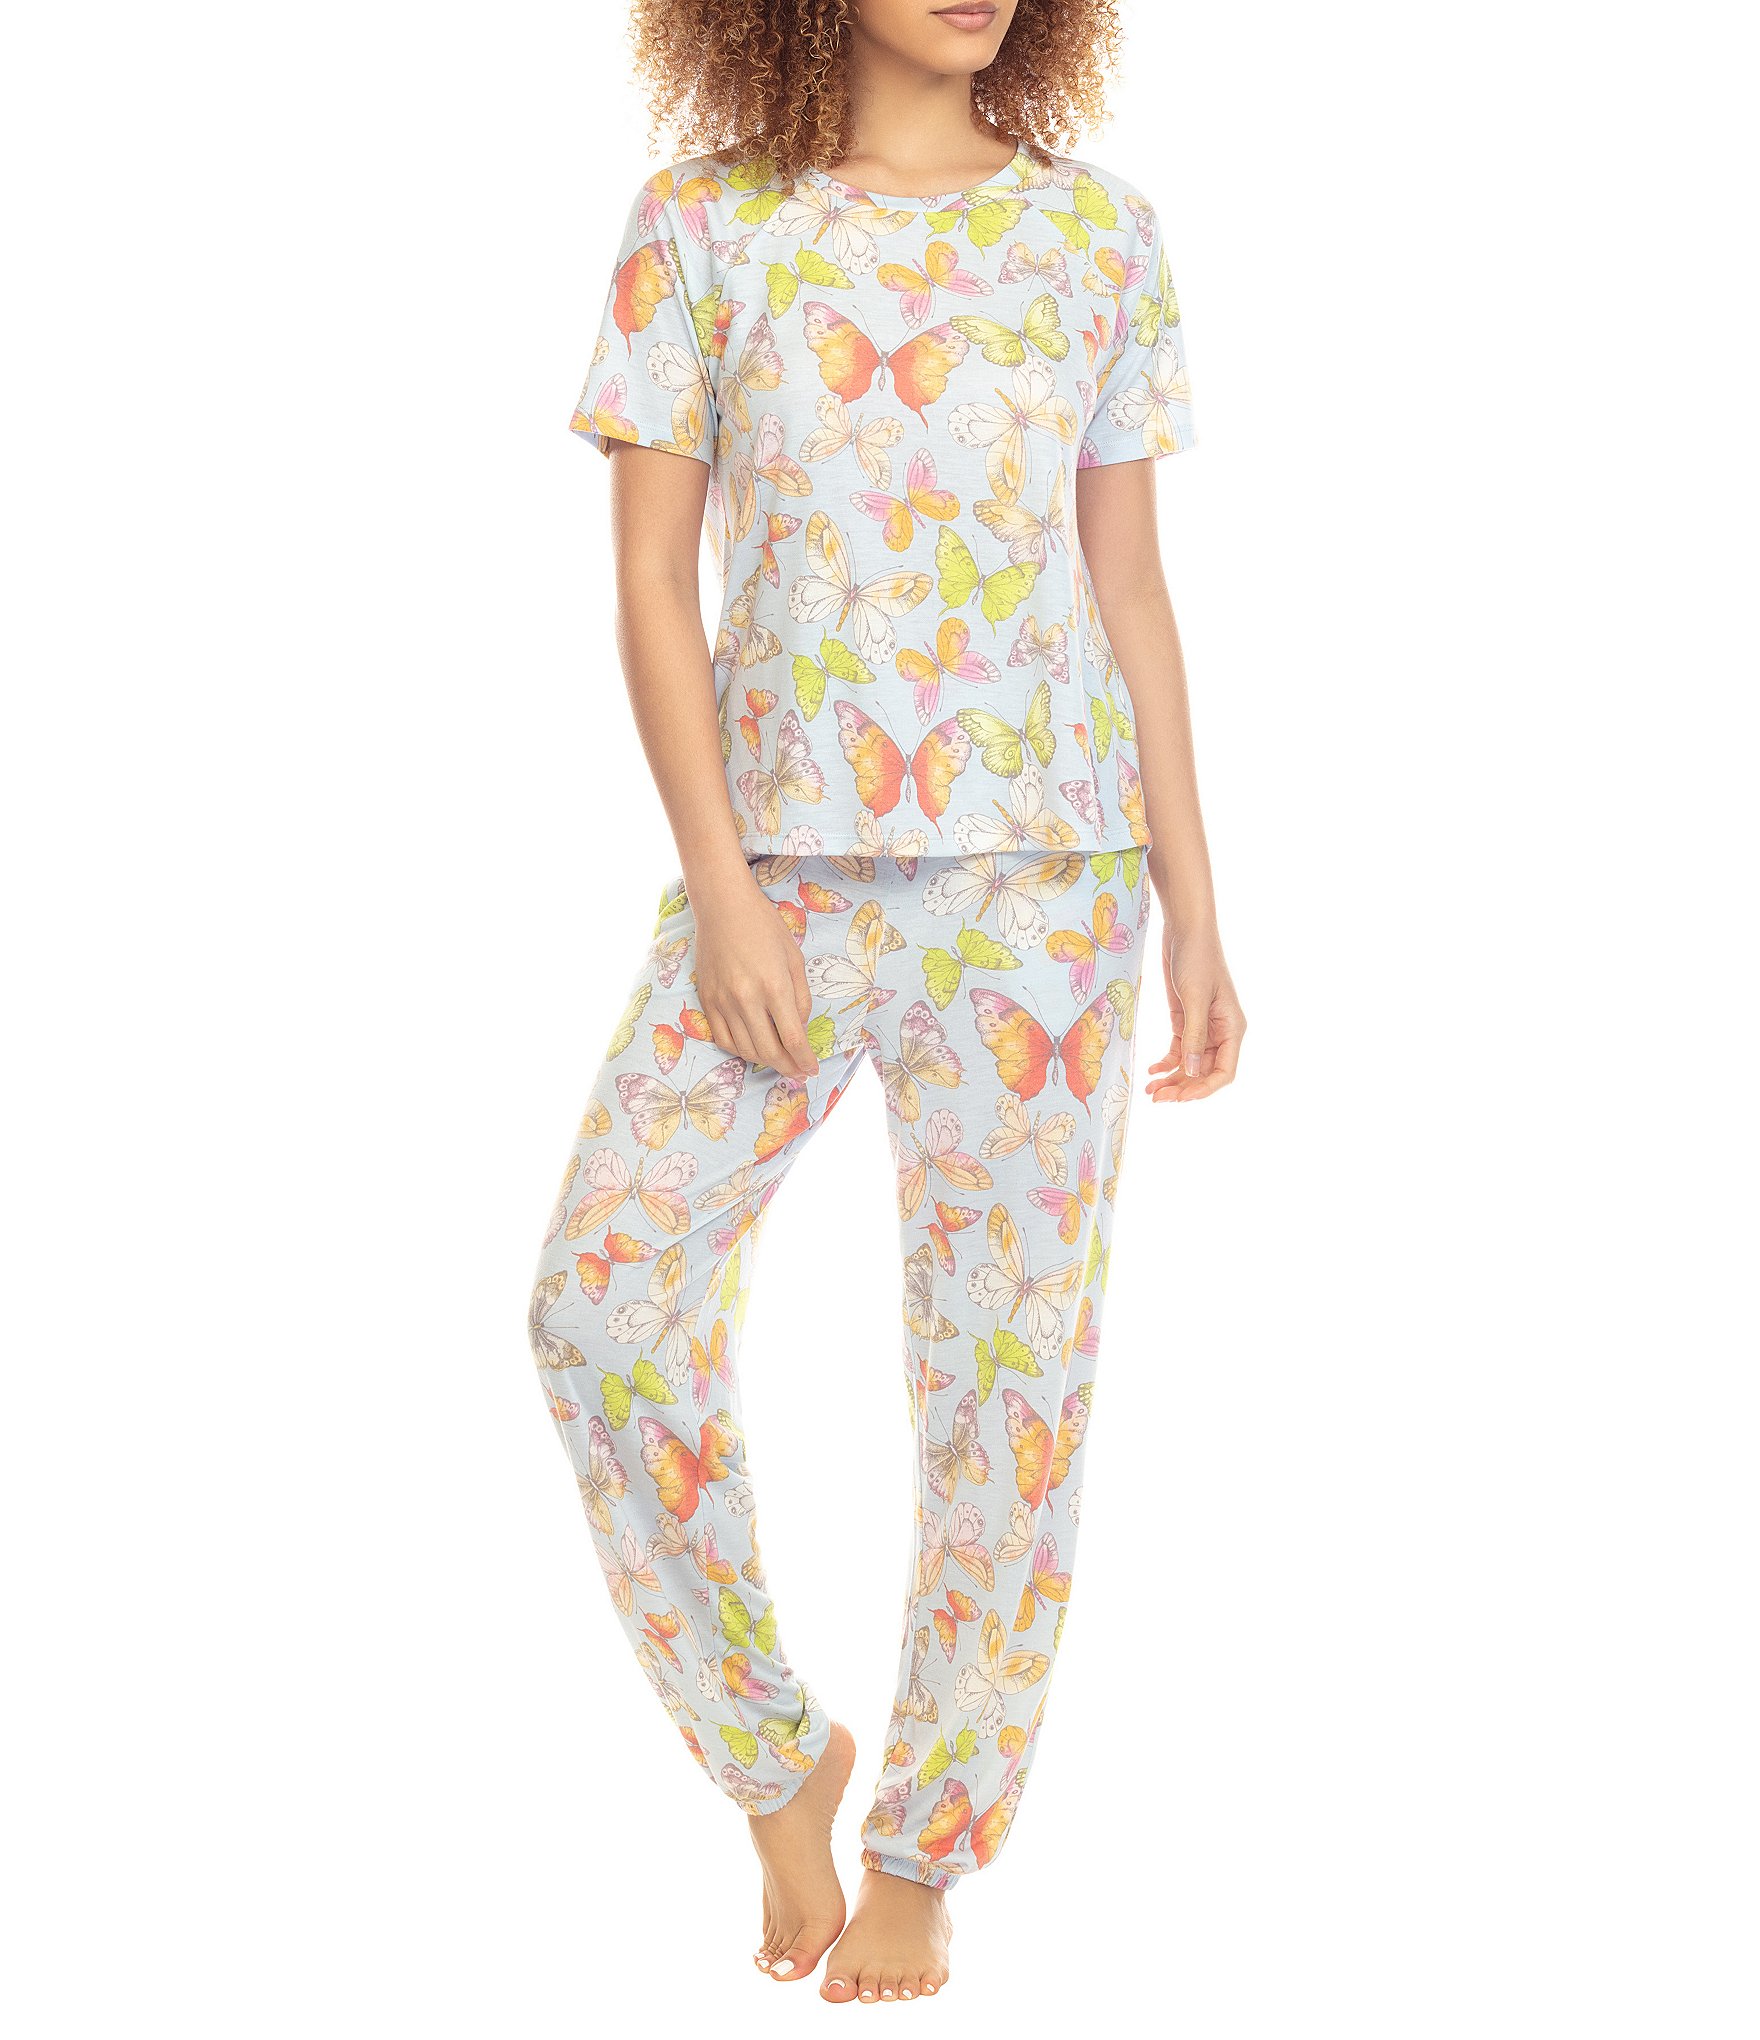 Honeydew Intimates Women's Pajamas & Sleepwear